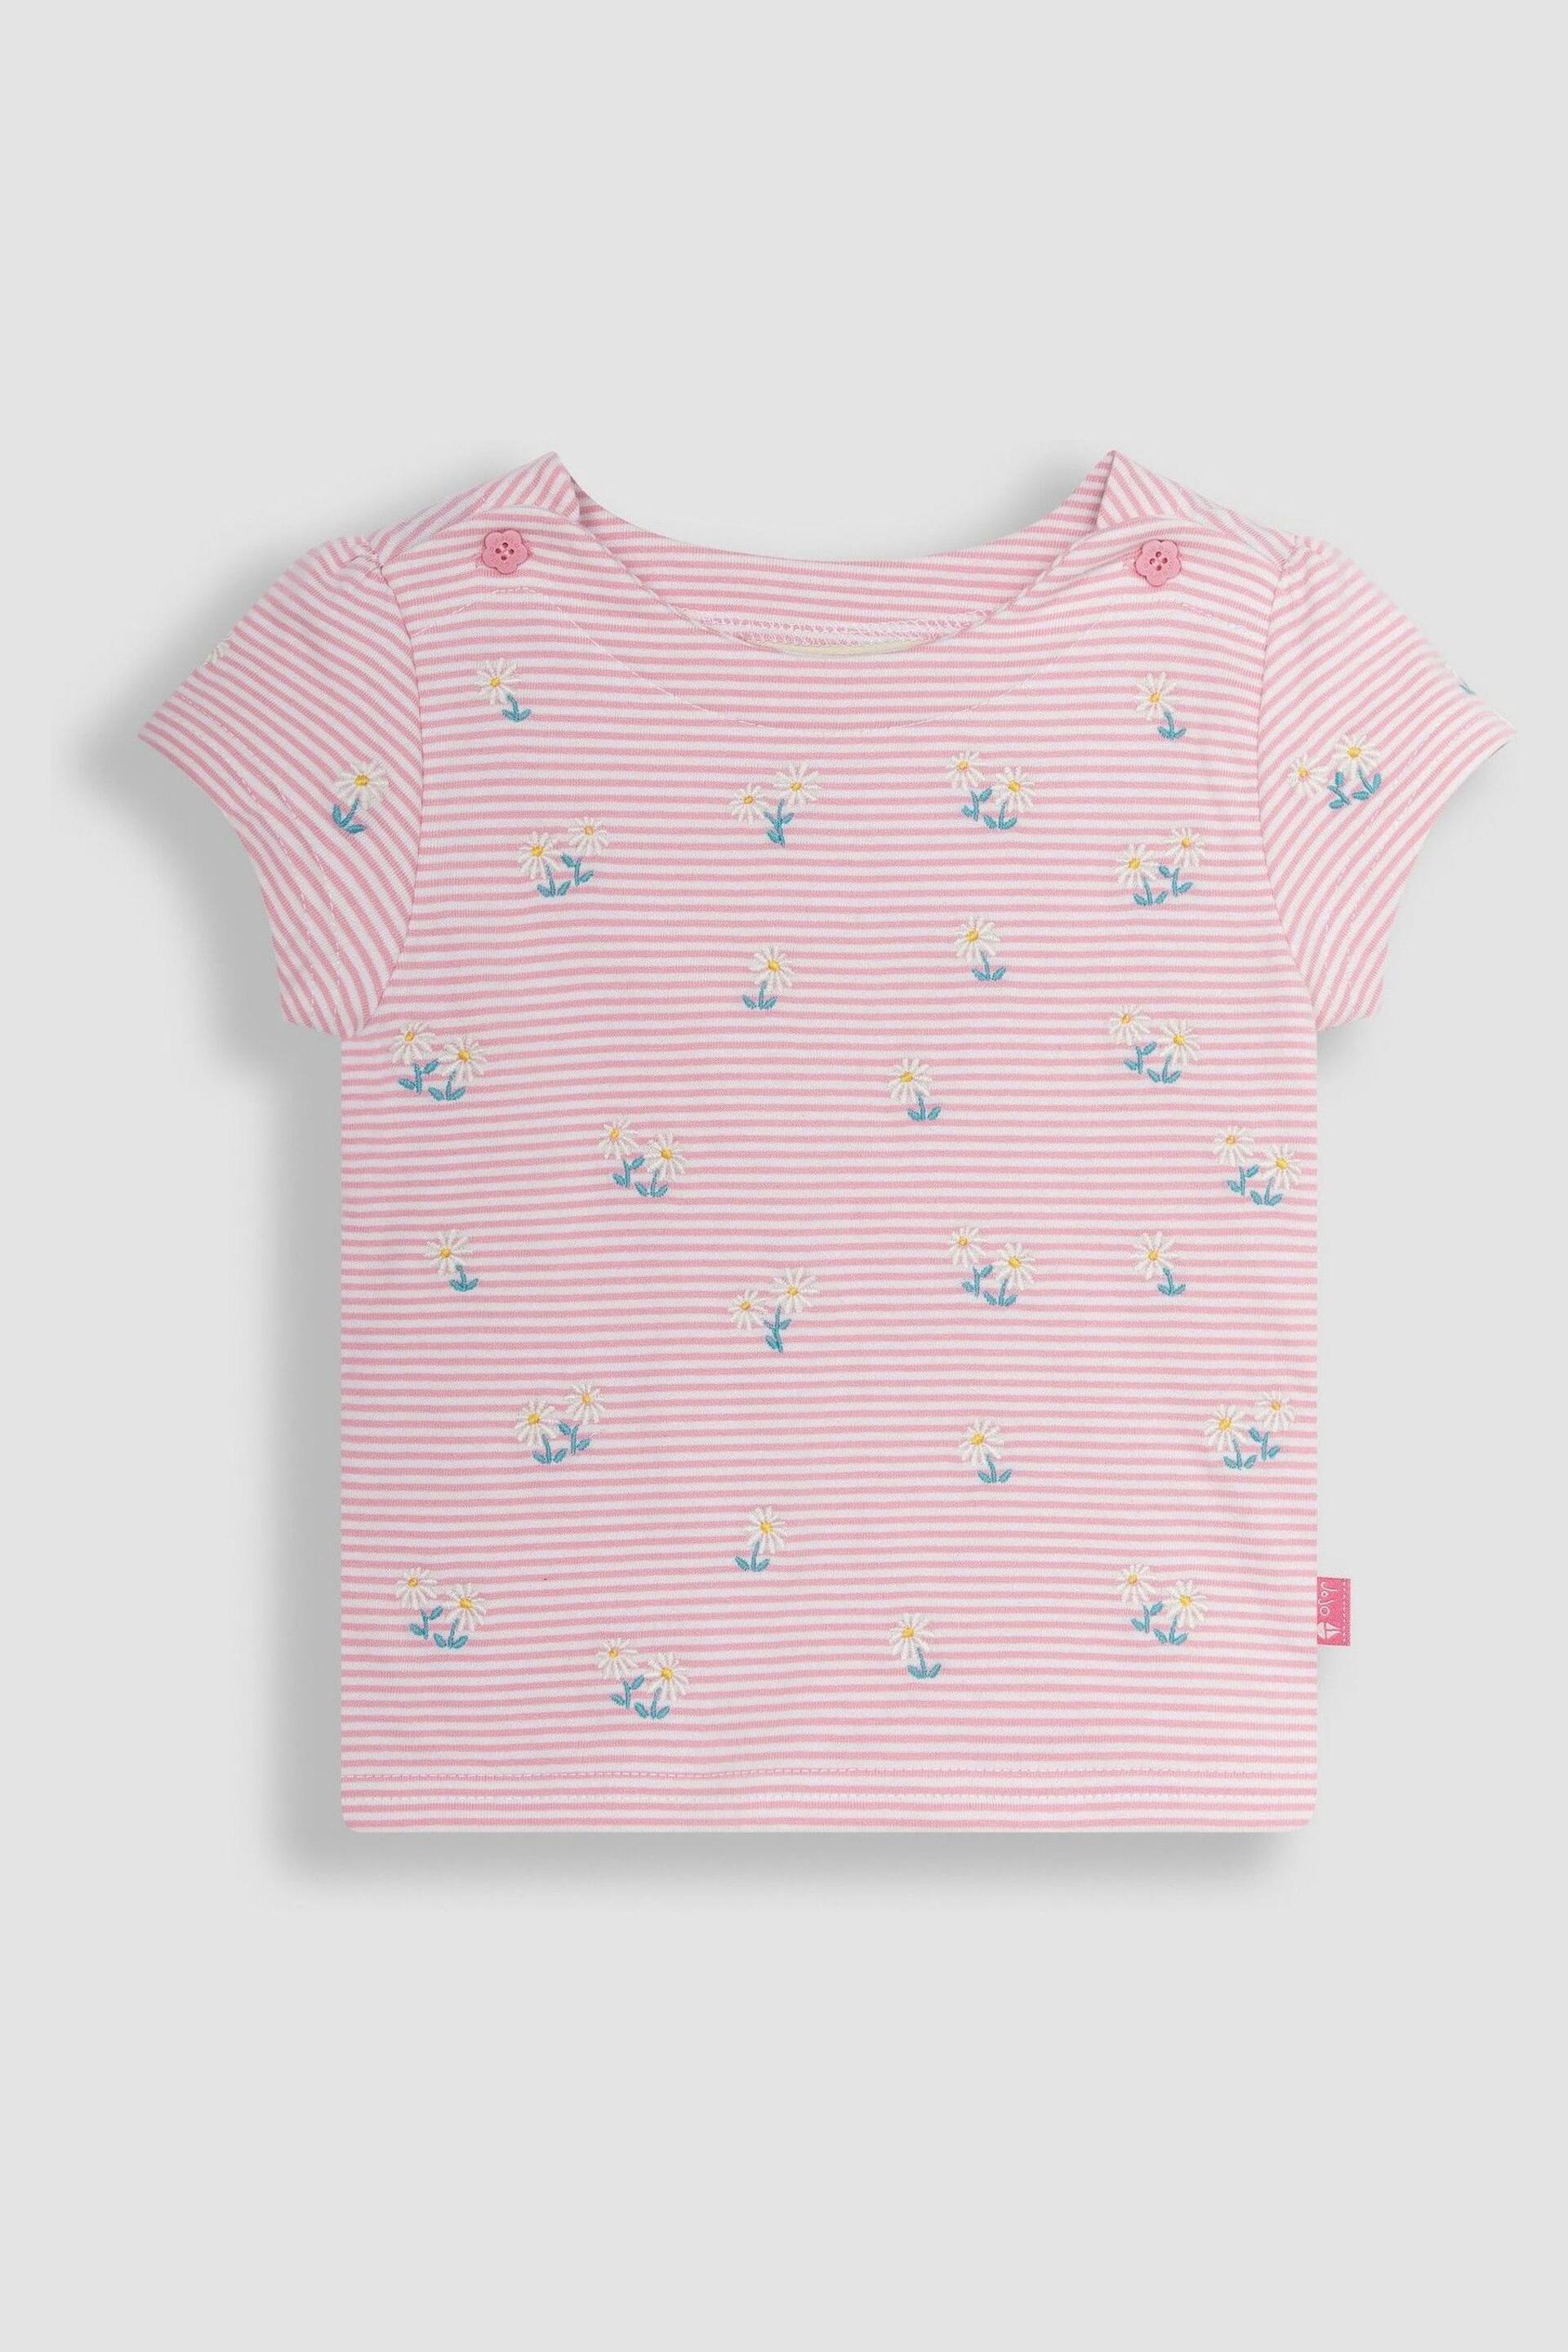 JoJo Maman Bébé Pink Daisy Embroidered T-Shirt - Image 1 of 3